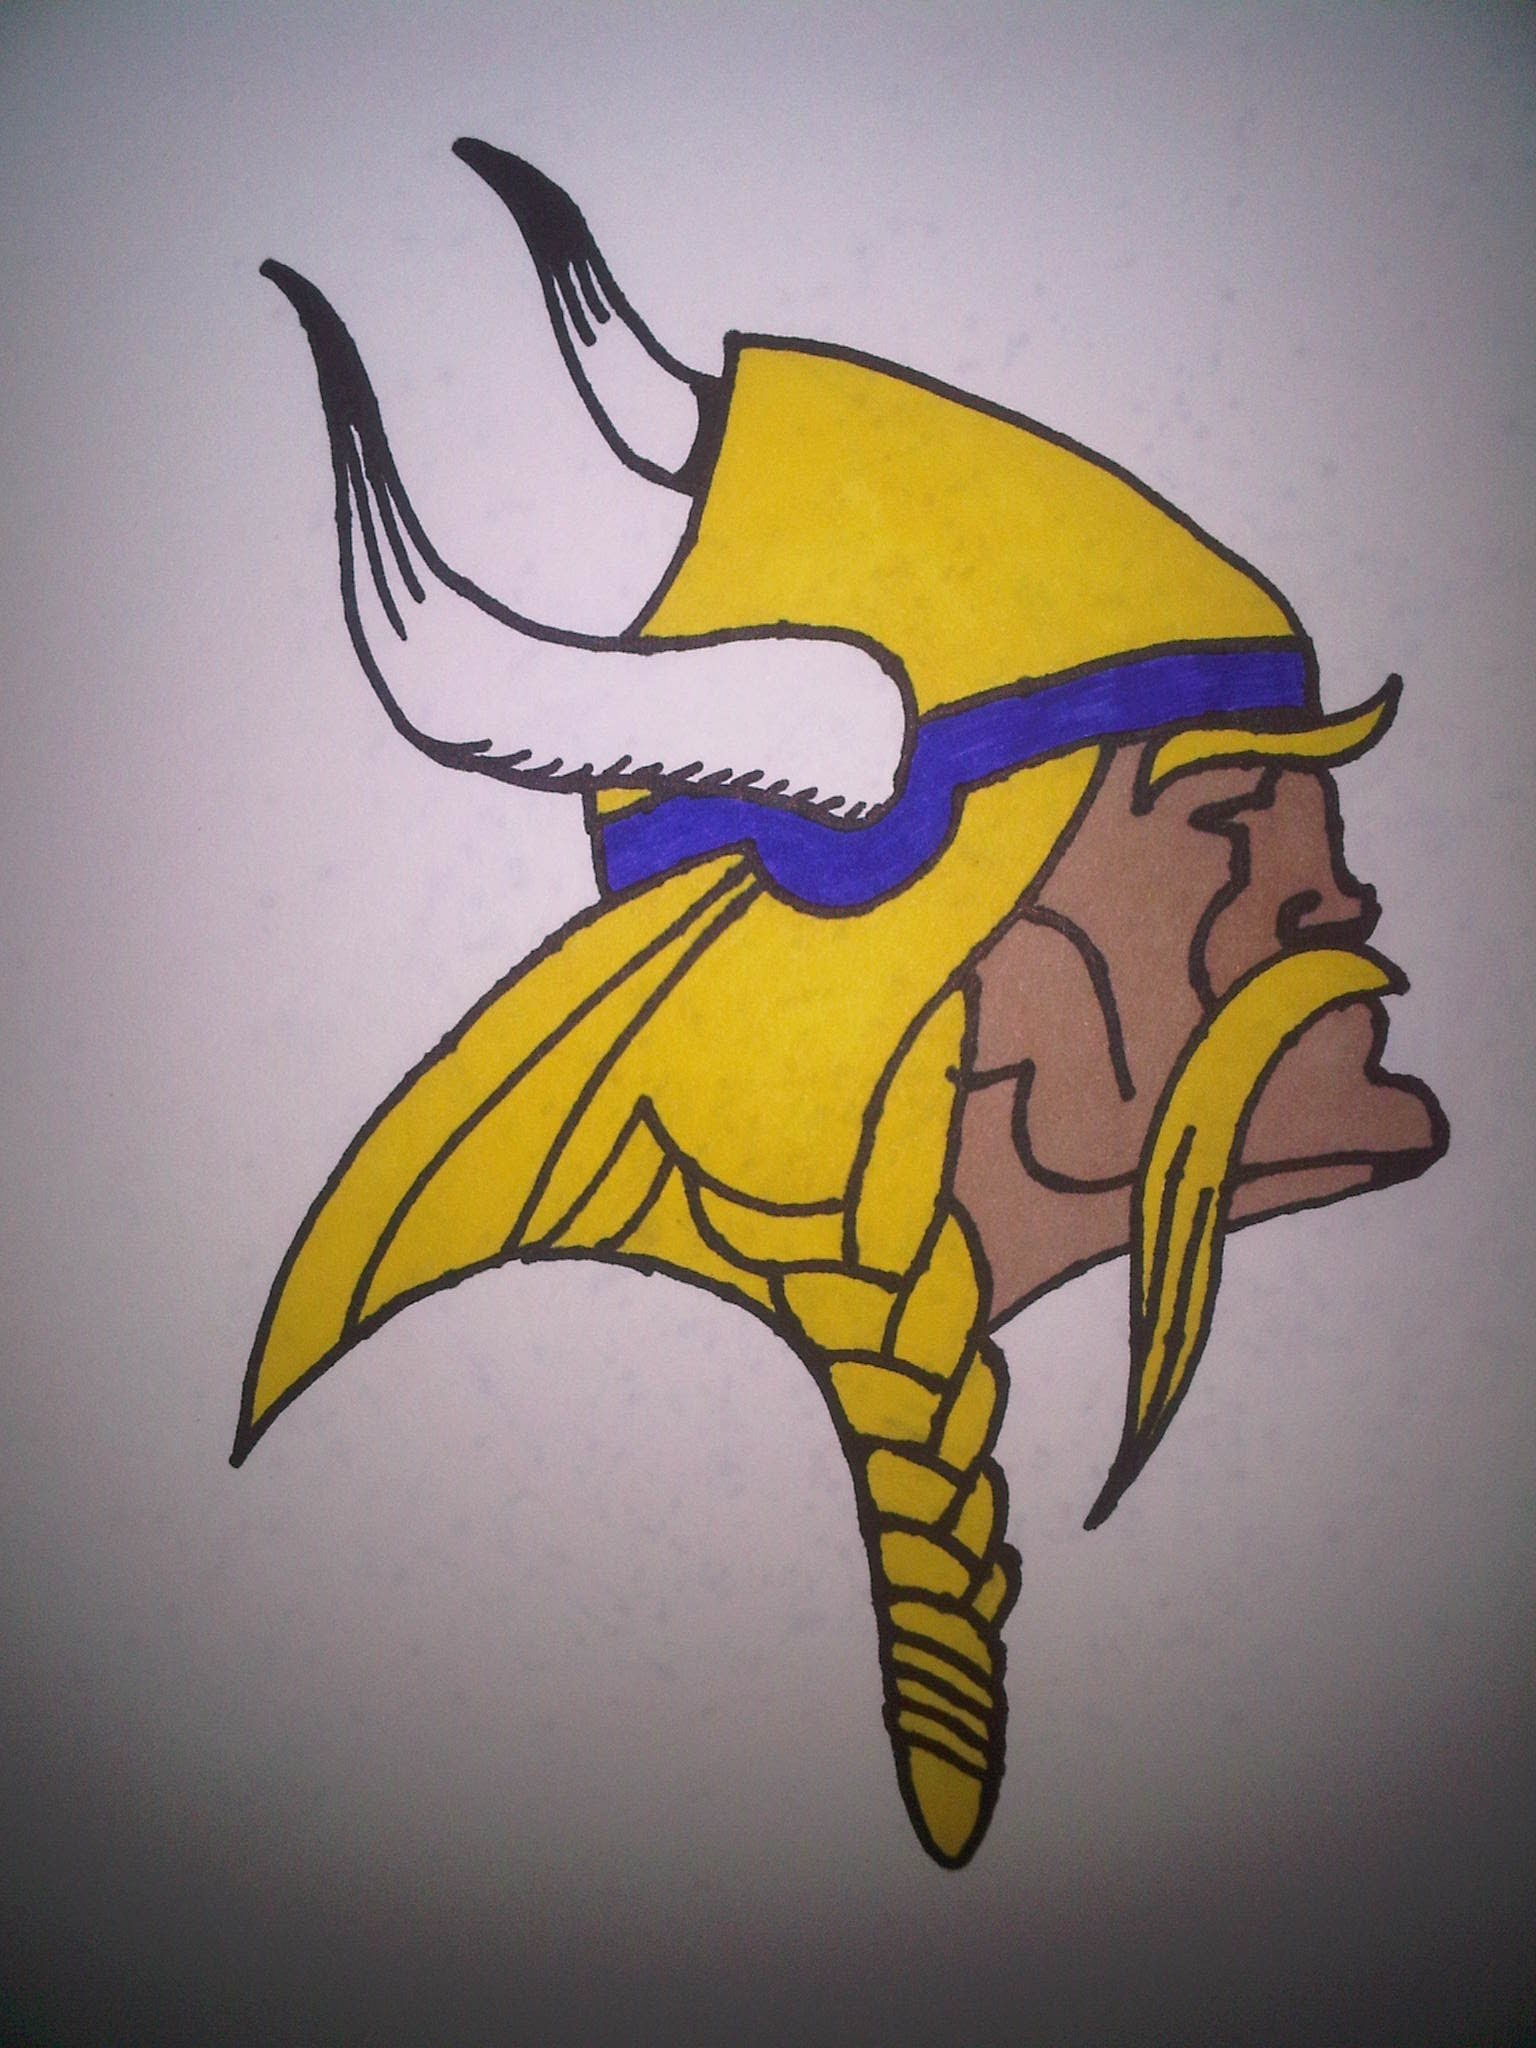 1536x2048 How to Draw the Minnesota Vikings logo - YouTube